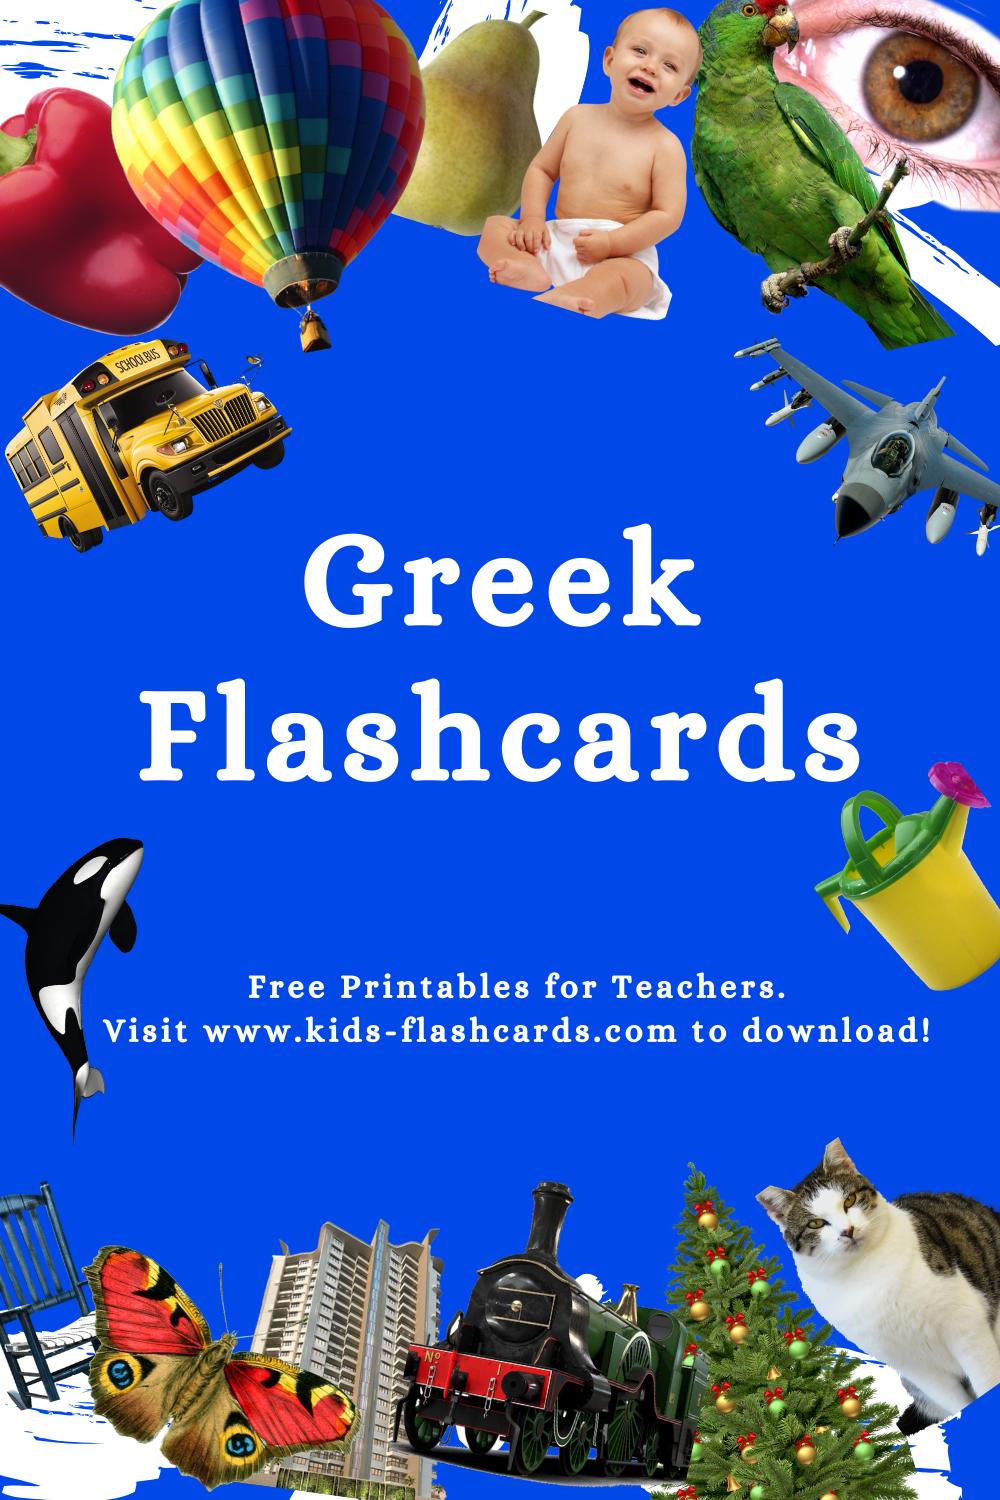 Worksheets to learn Greek language